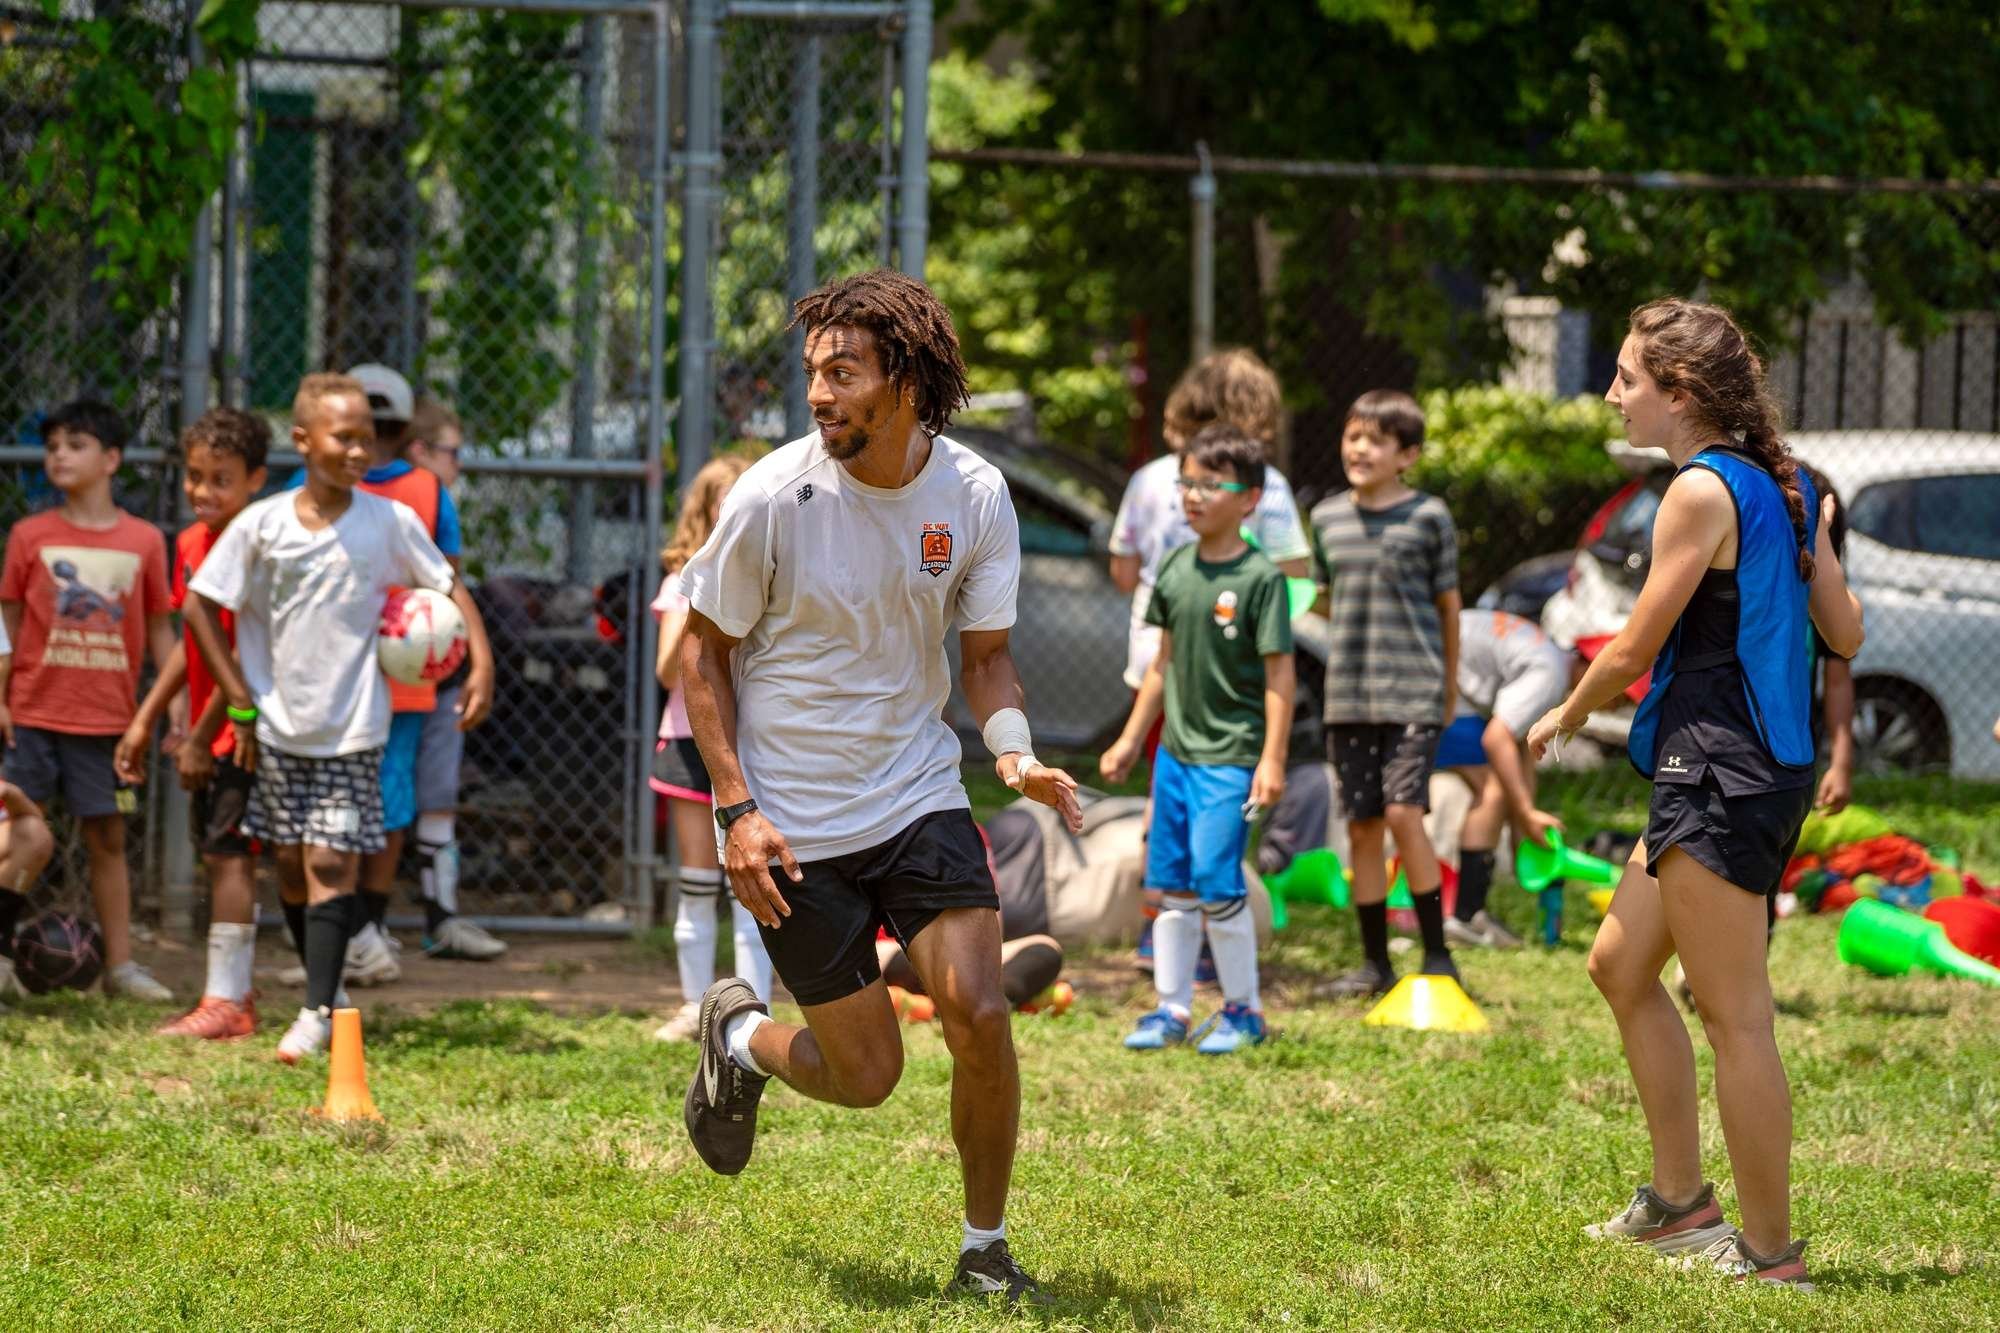 Dc-way-soccer-club-for-kids-in-washington-dc-summer-camp-at-tyler-elementary-school- 0141.jpg